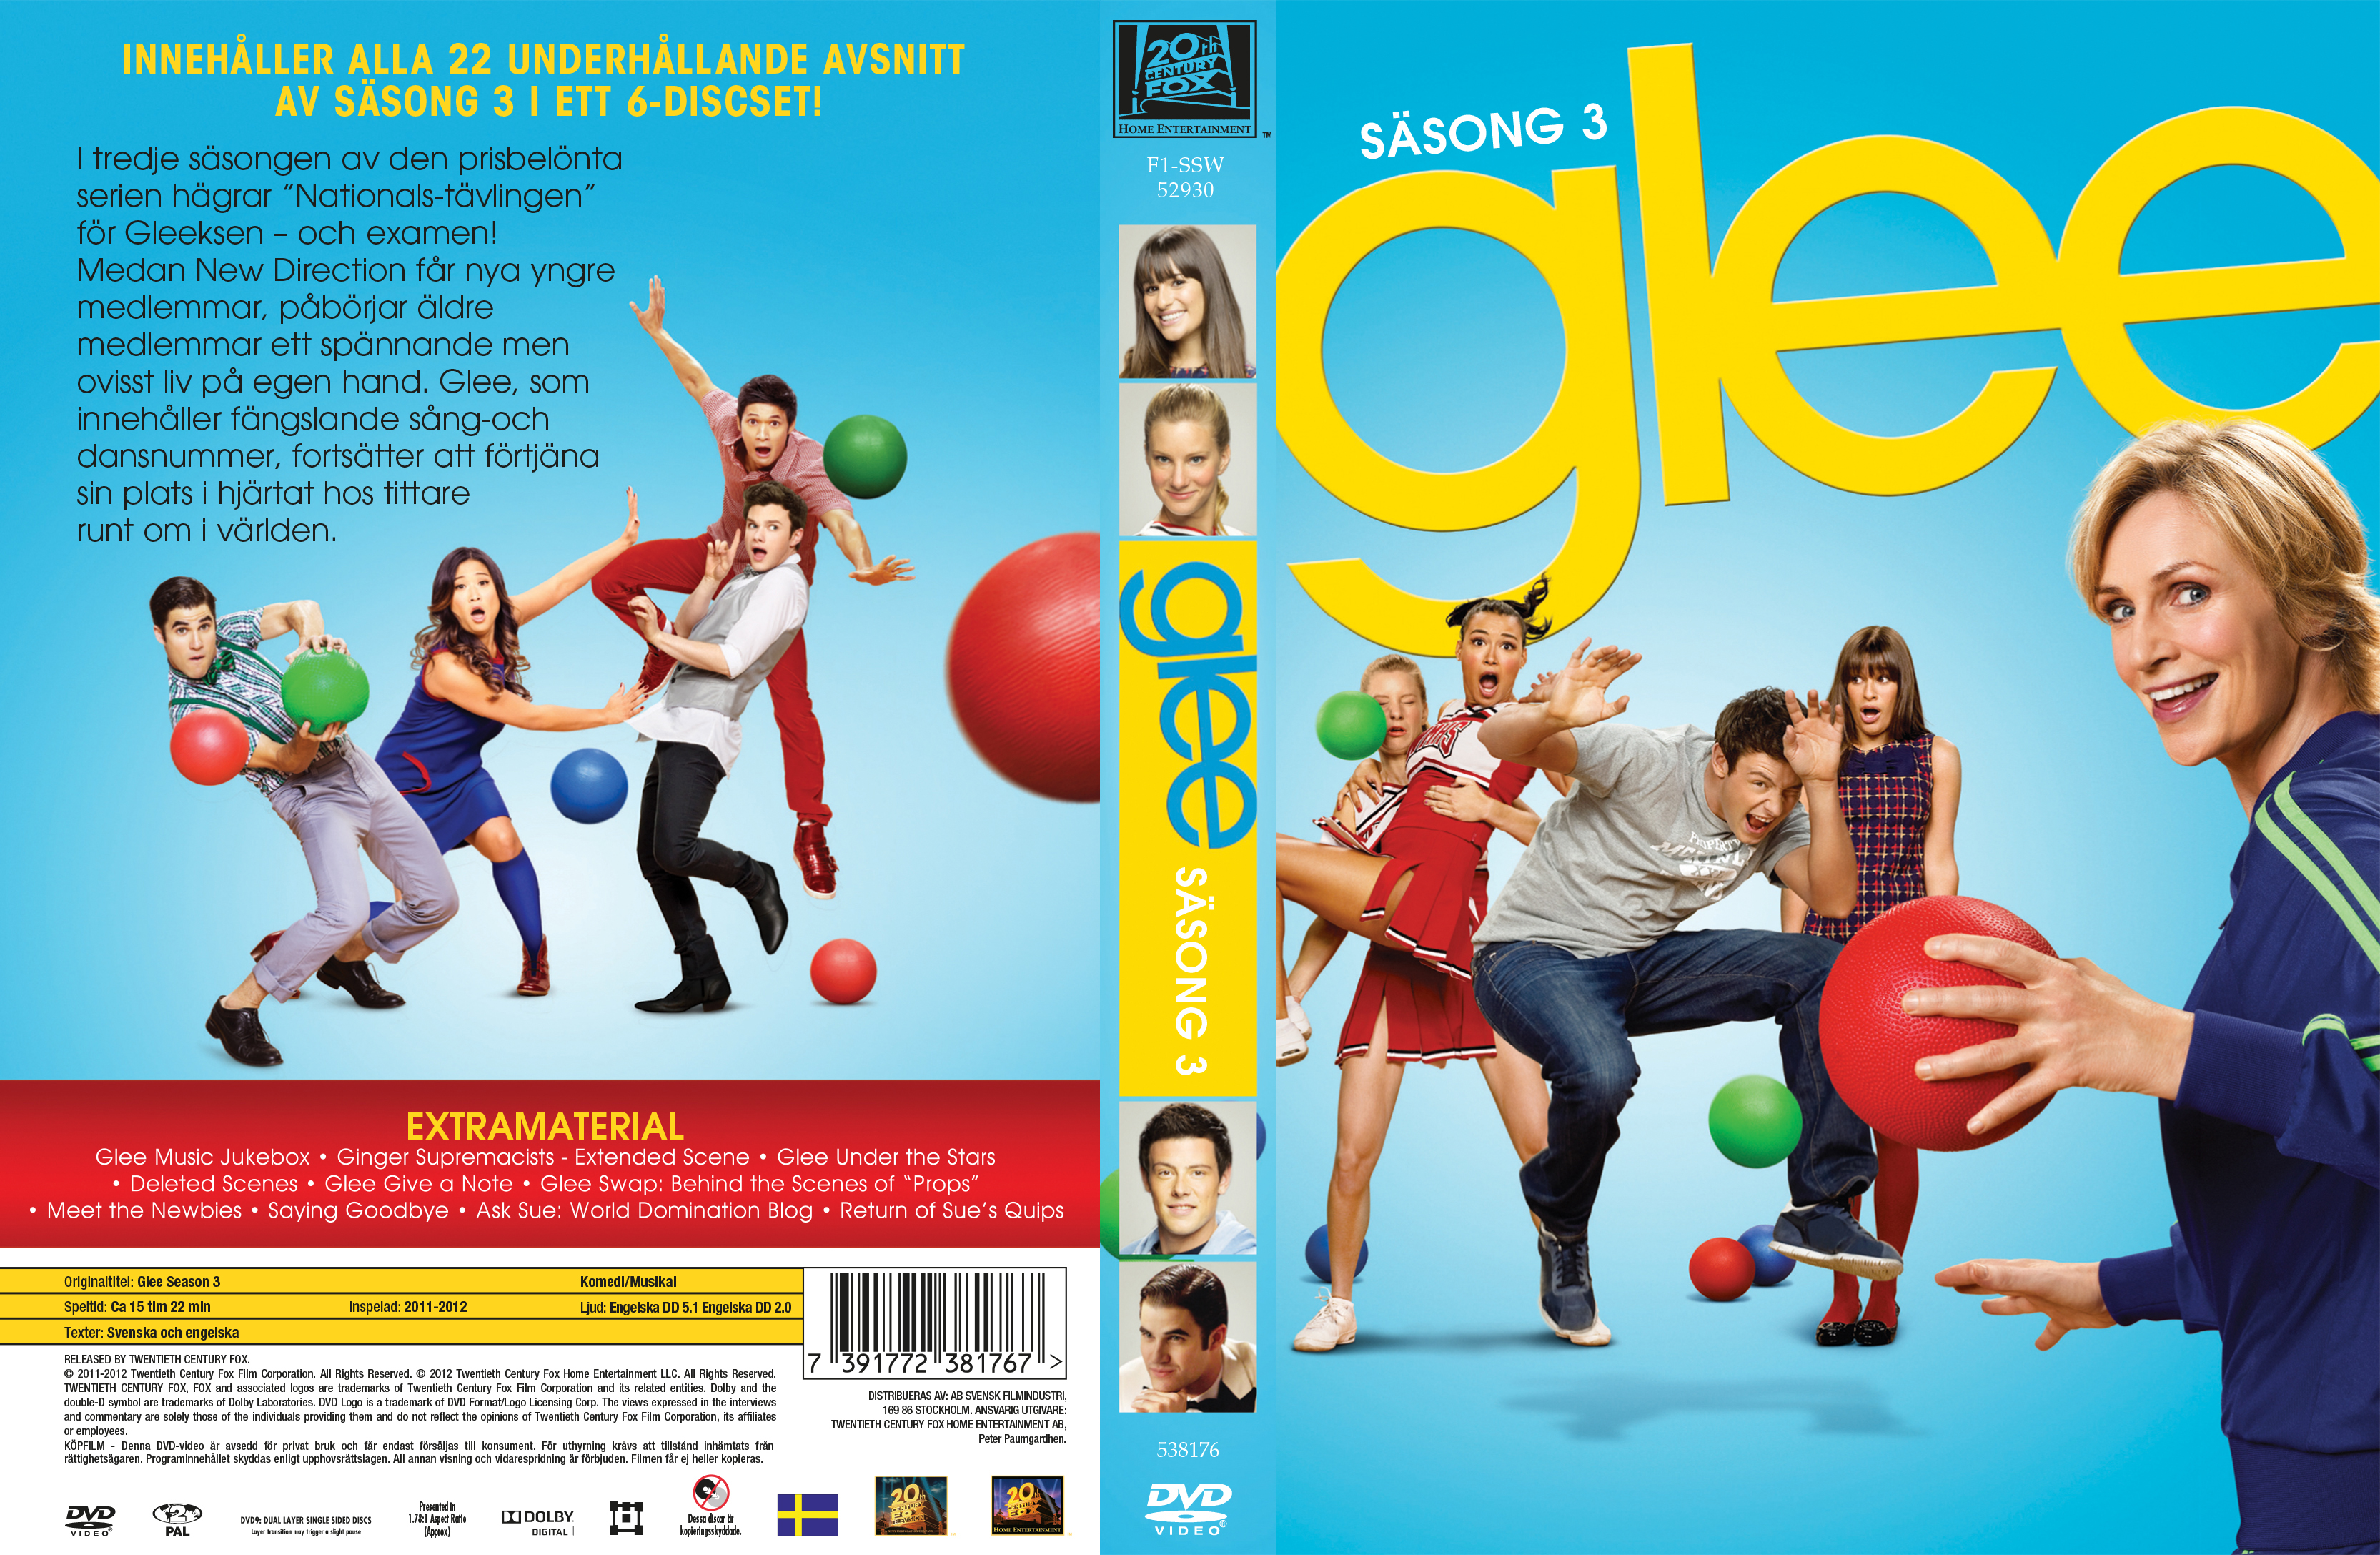 Covers Box Sk Glee Season 3 High Quality Dvd Blueray Movie